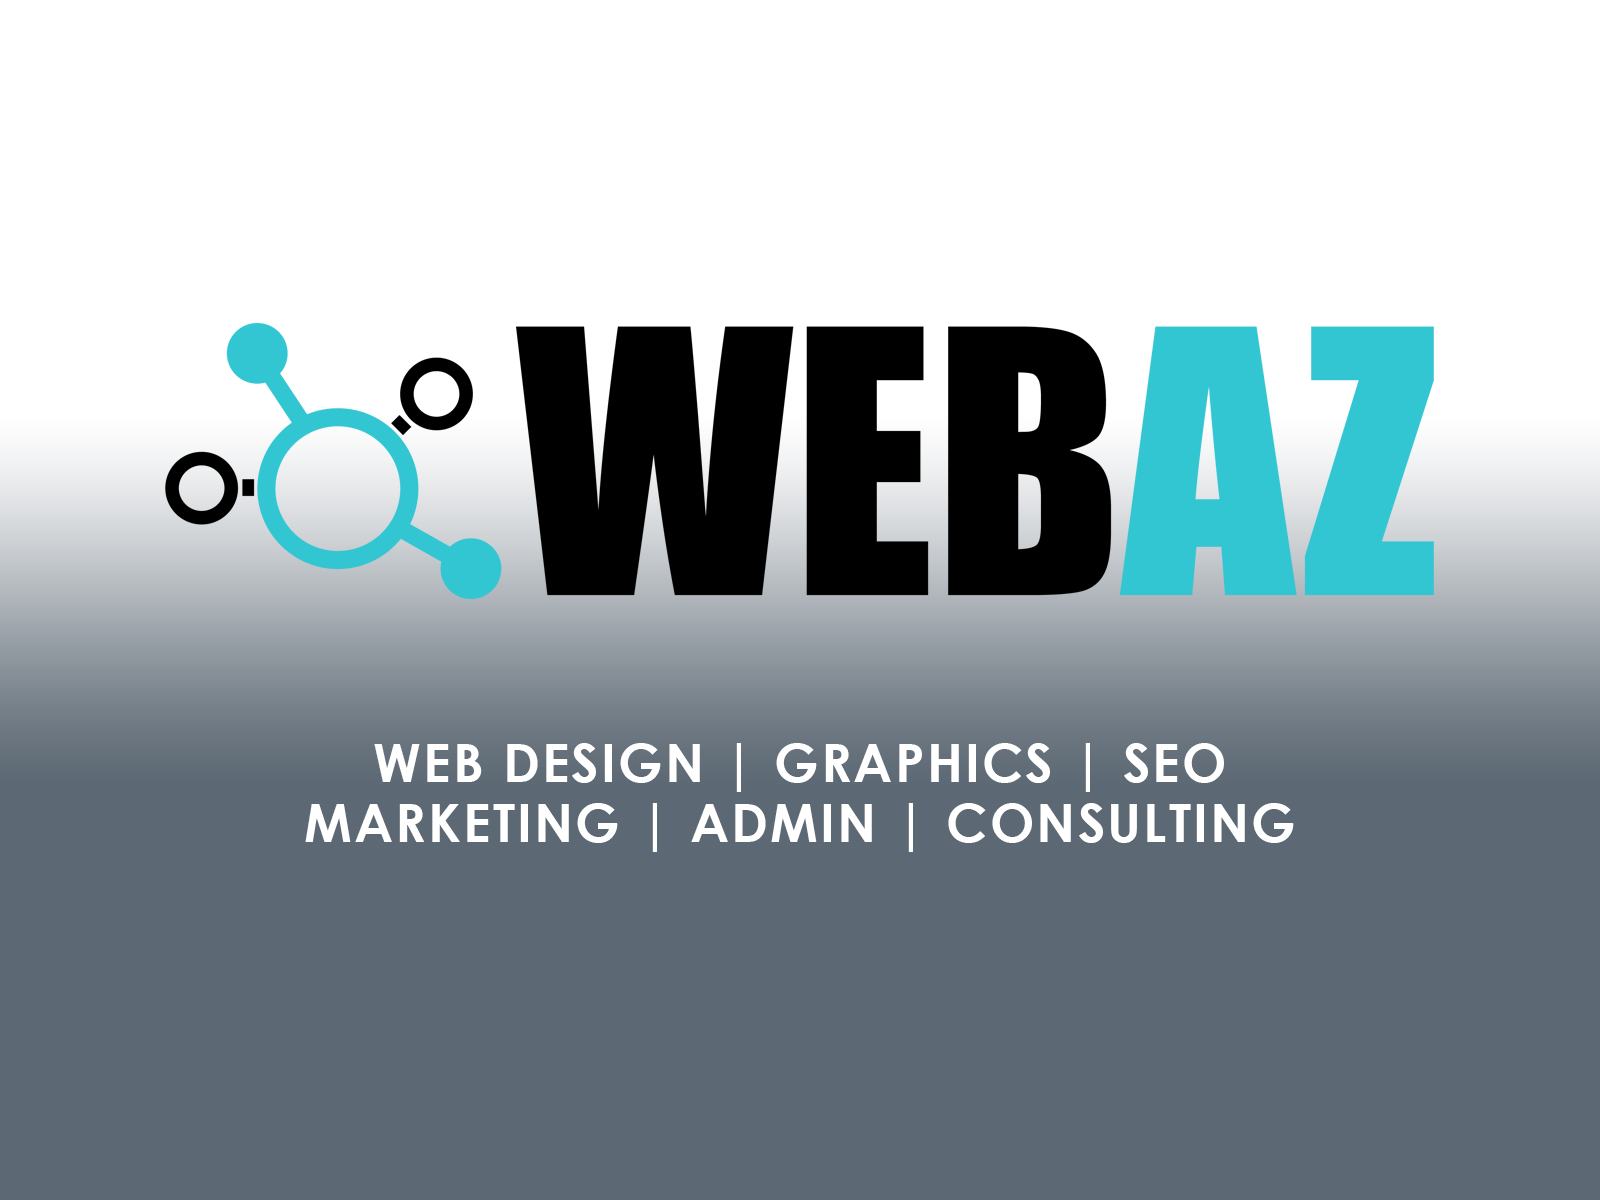 WebAZ web design web development seo marketing consulting admin services